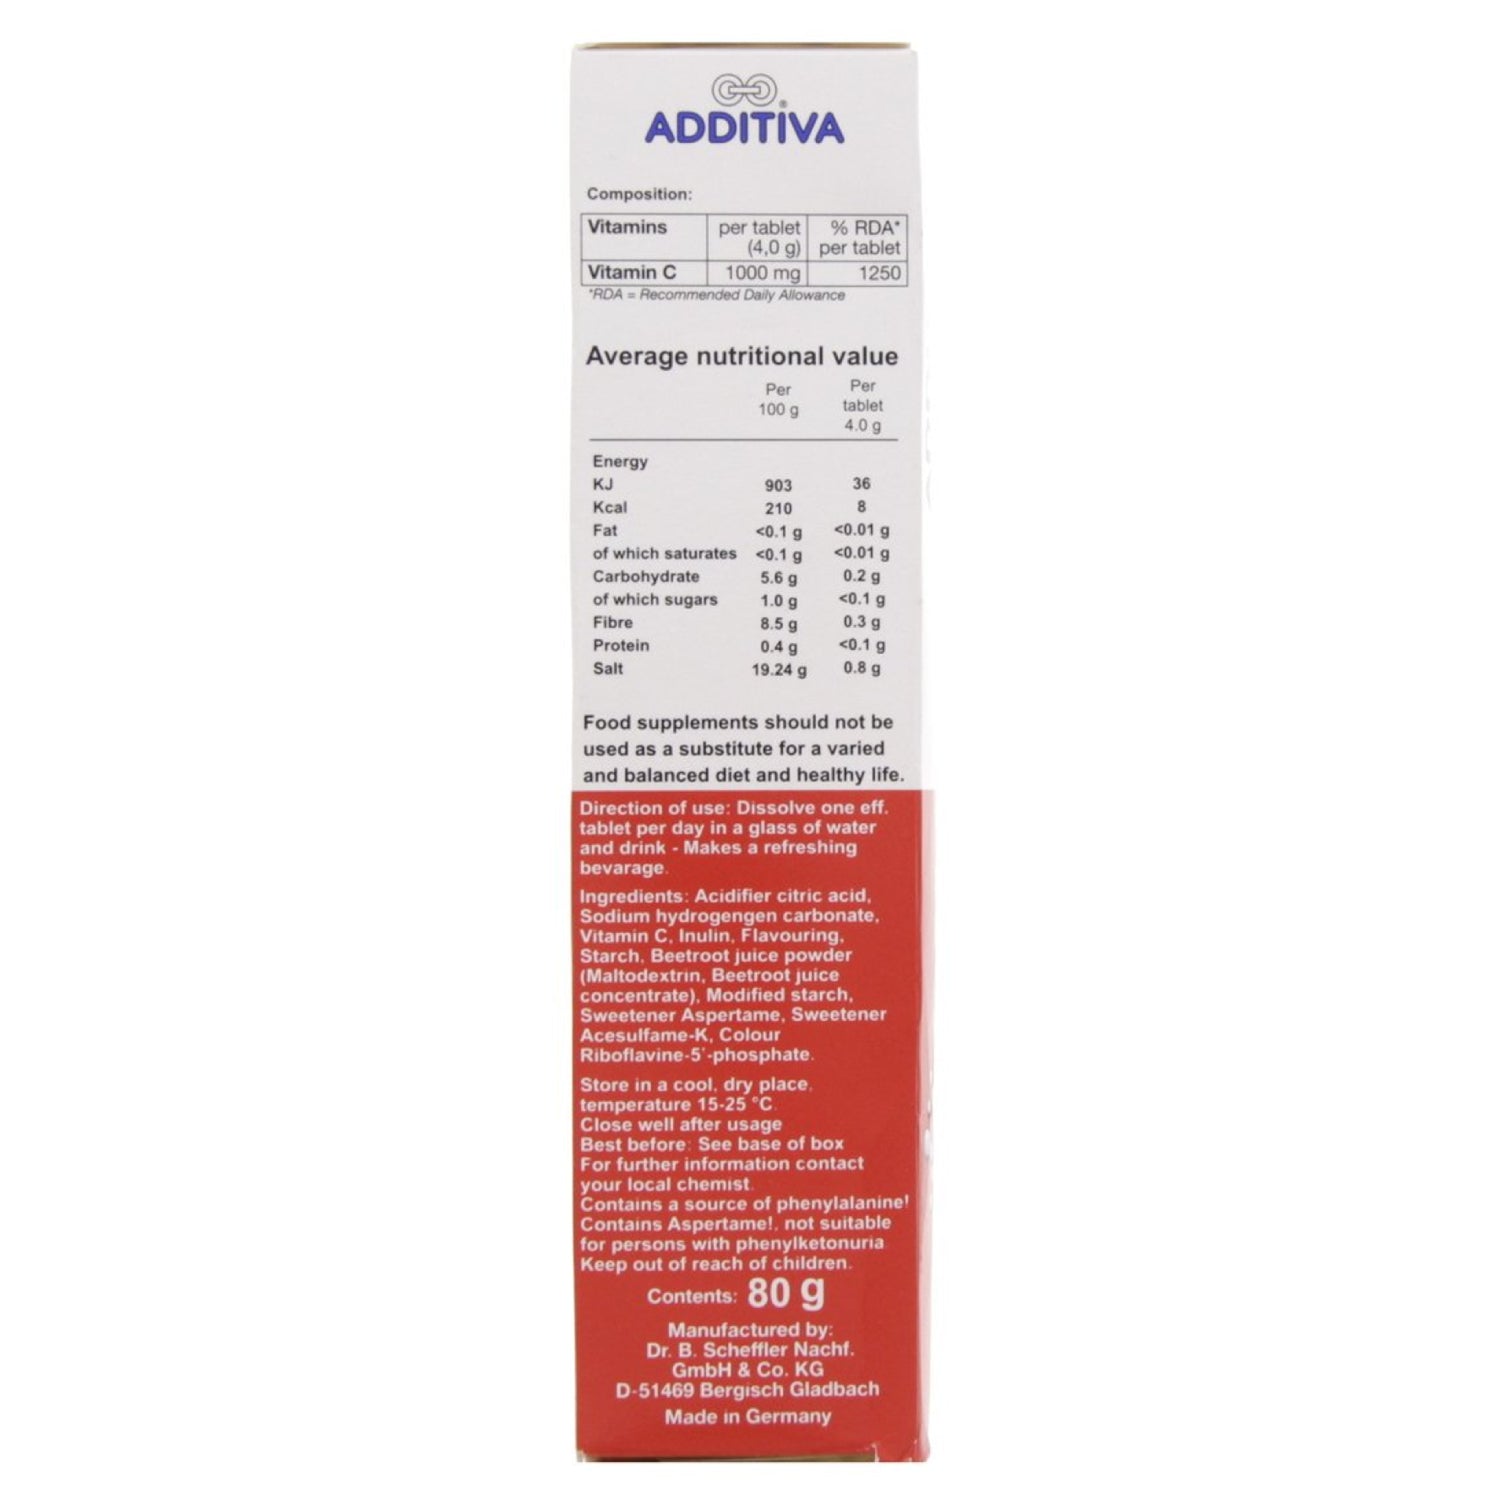 Additiva Vitamin C 1000MG Red Orange Effervescent Tablets 20's